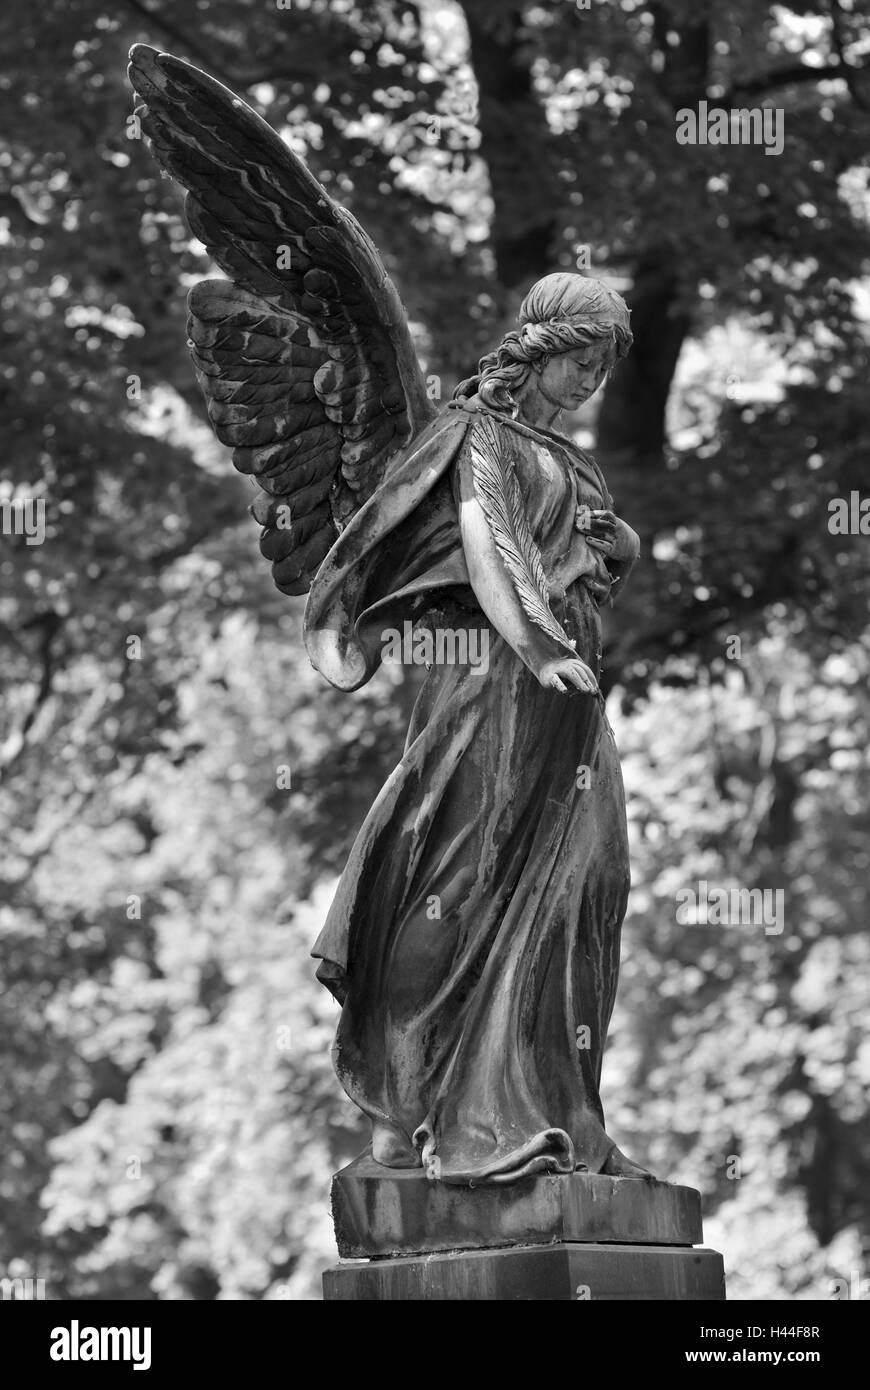 Engel, statua, testa, ala, albero, rami, foglie, b/w, Foto Stock